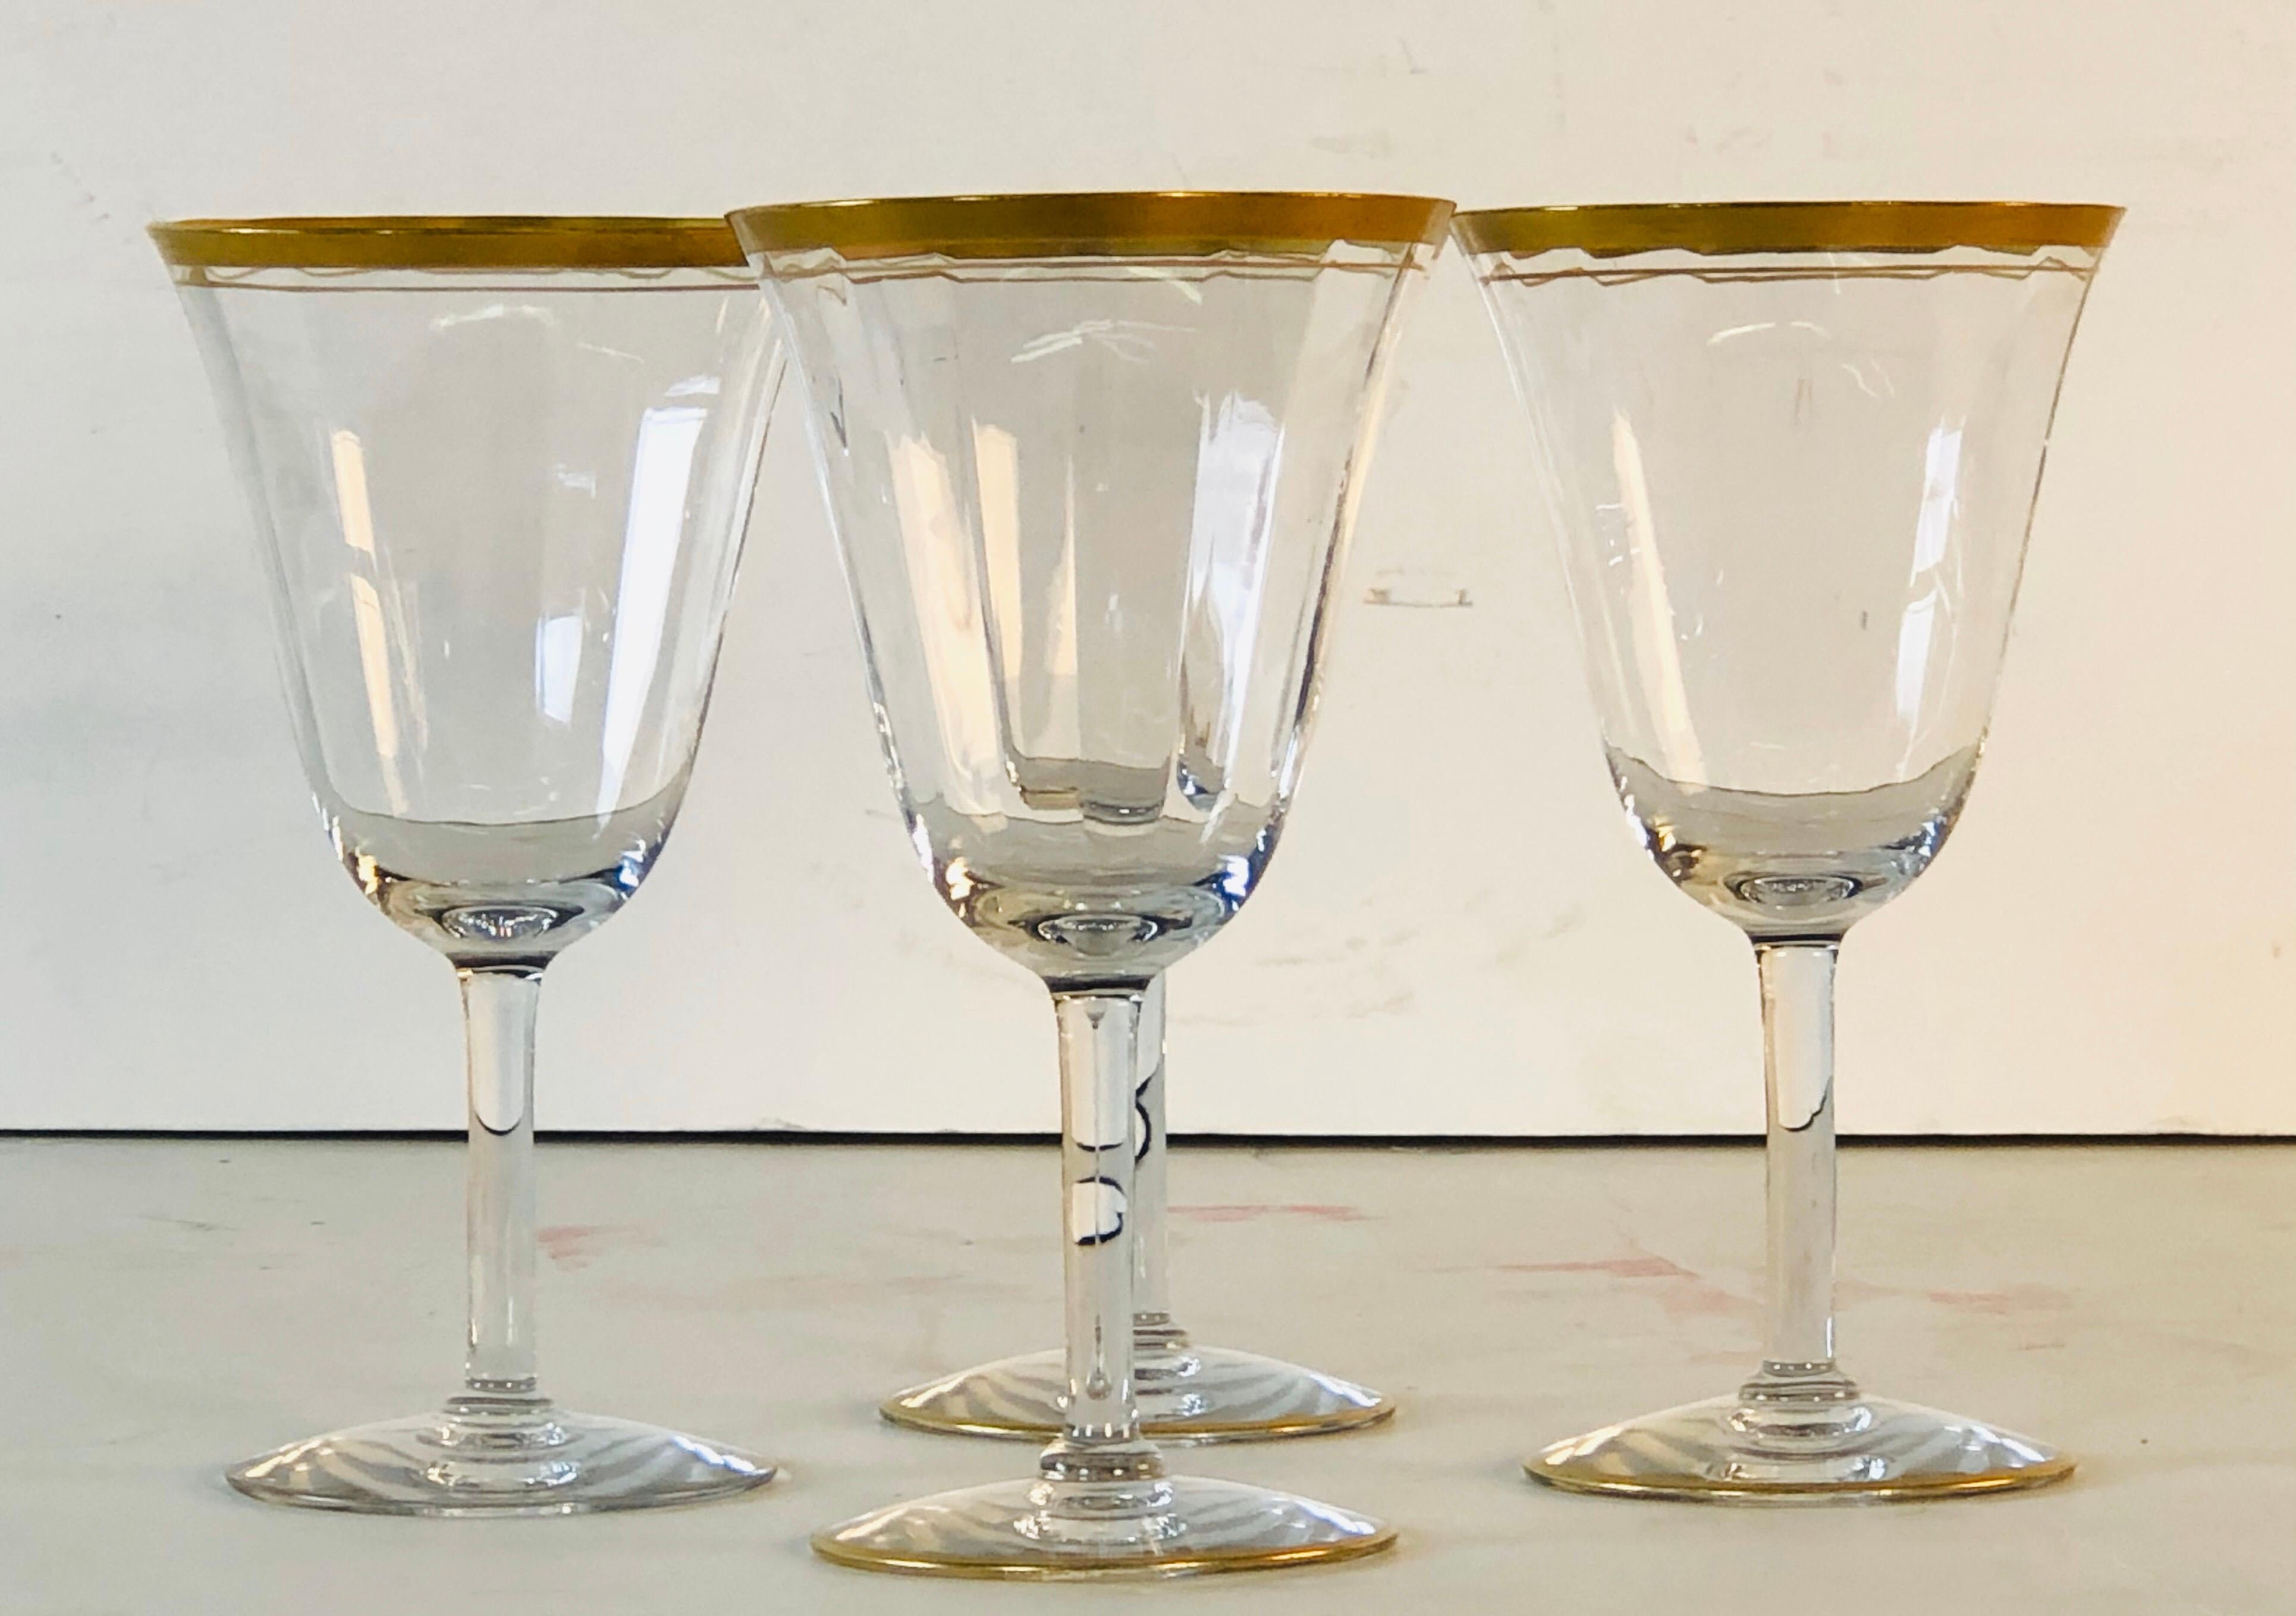 Vintage 1950s set of 4 double gold rim wine glass stems. Excellent condition. No marks.